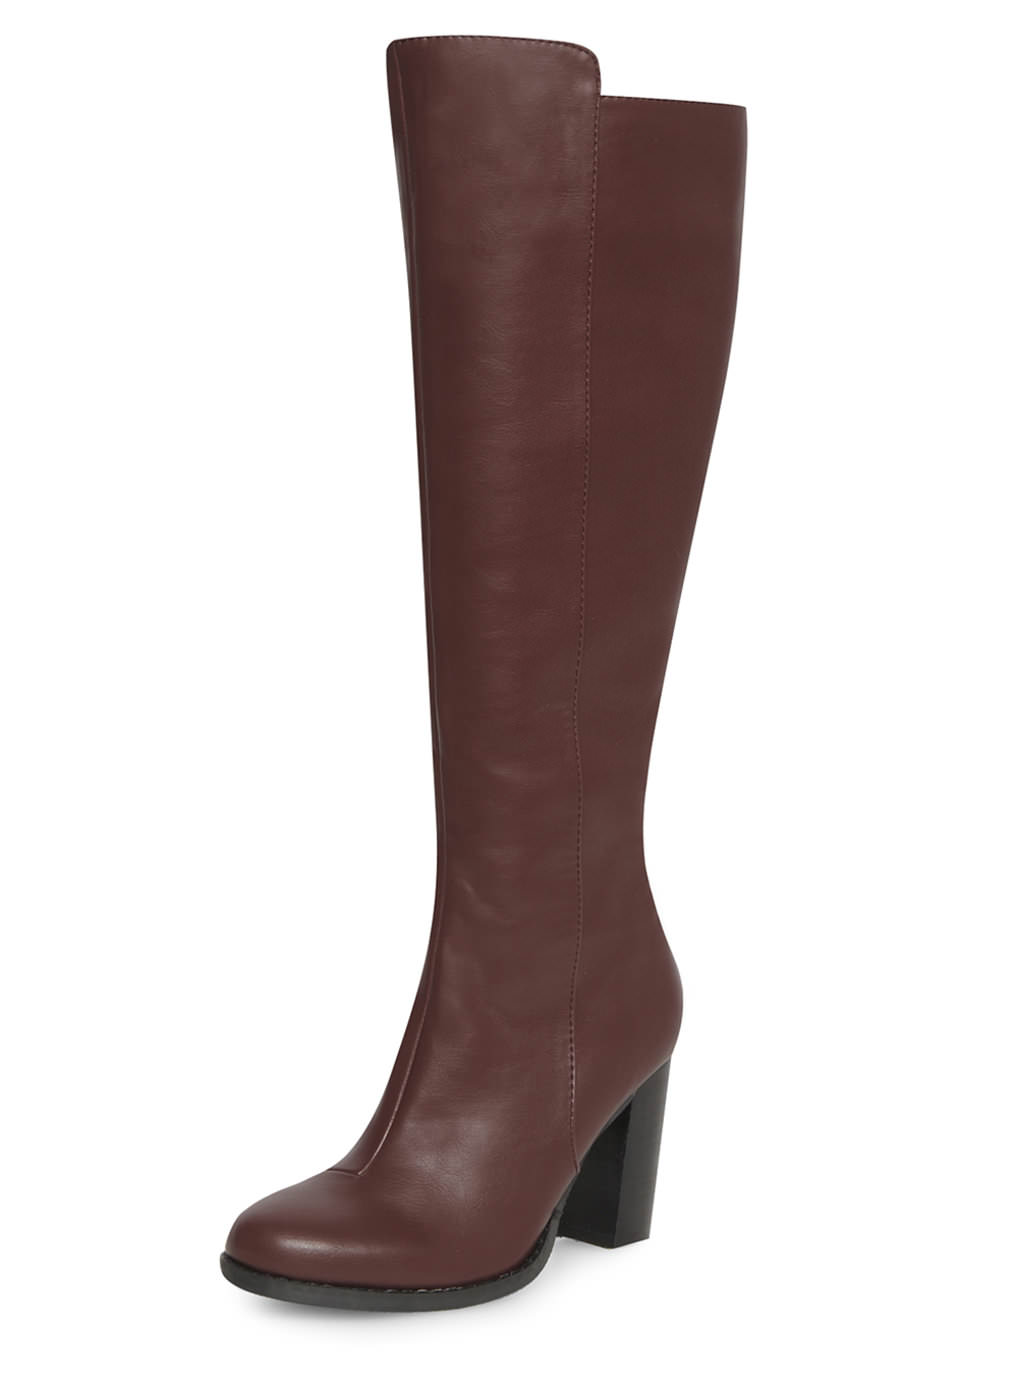 Burgundy Knee-High Boots £35.00 - Dorothy Perkins - Image: Dorothy Perkins